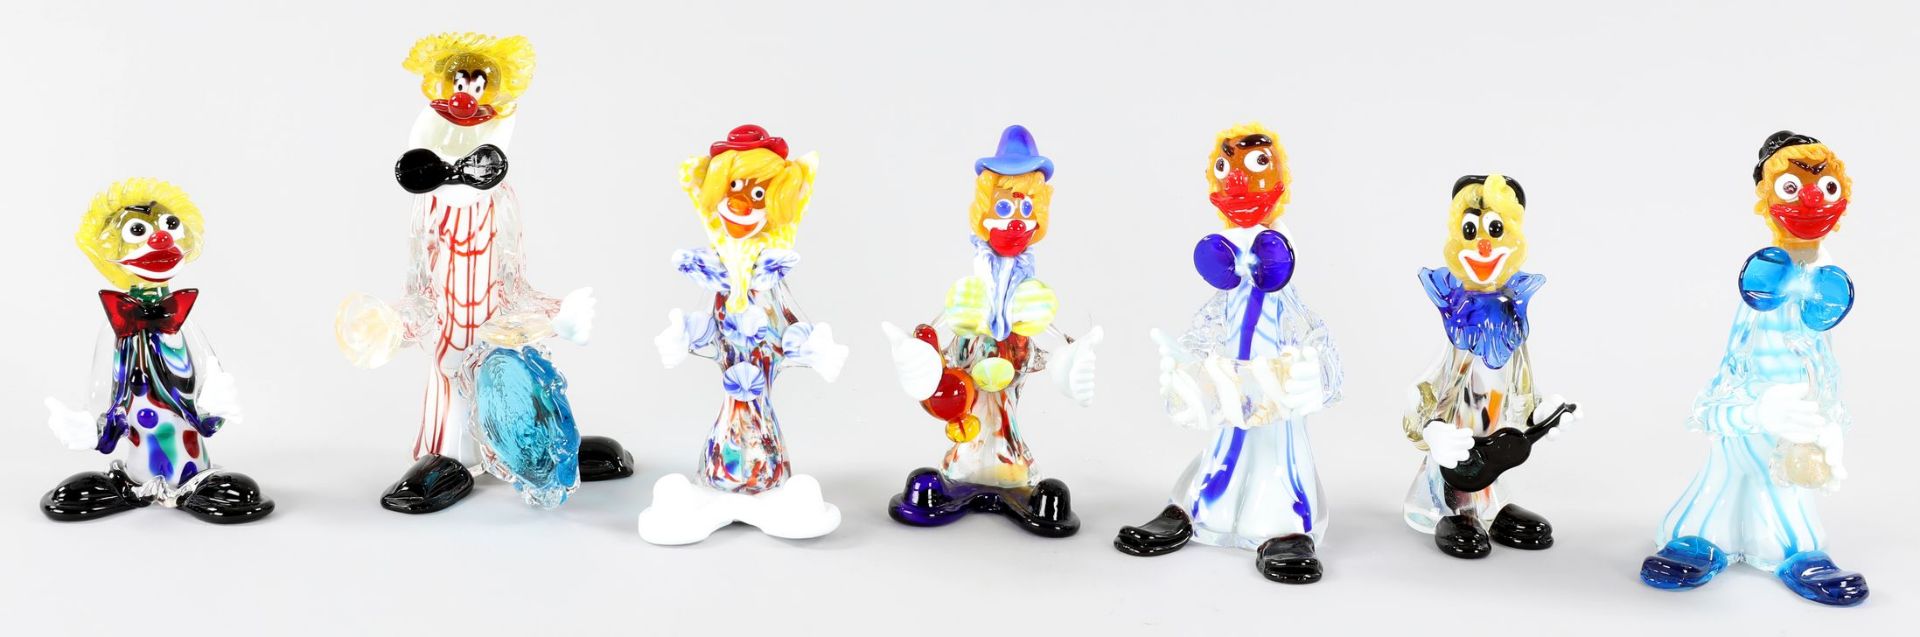 7 Clownfiguren